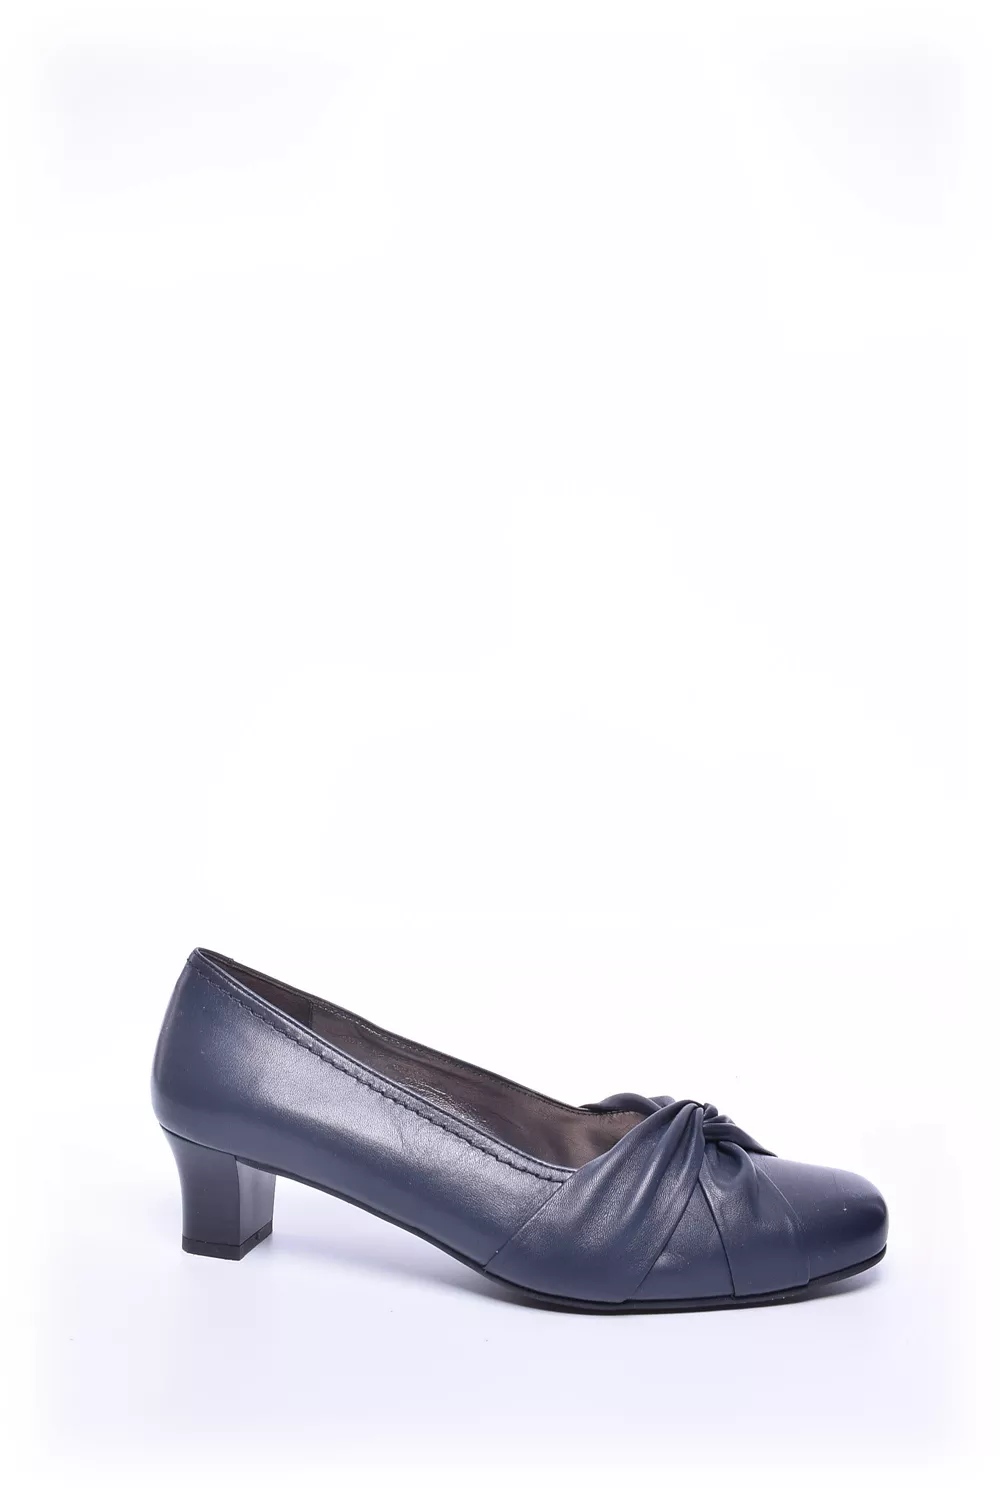 Pantofi vintage dama [0]